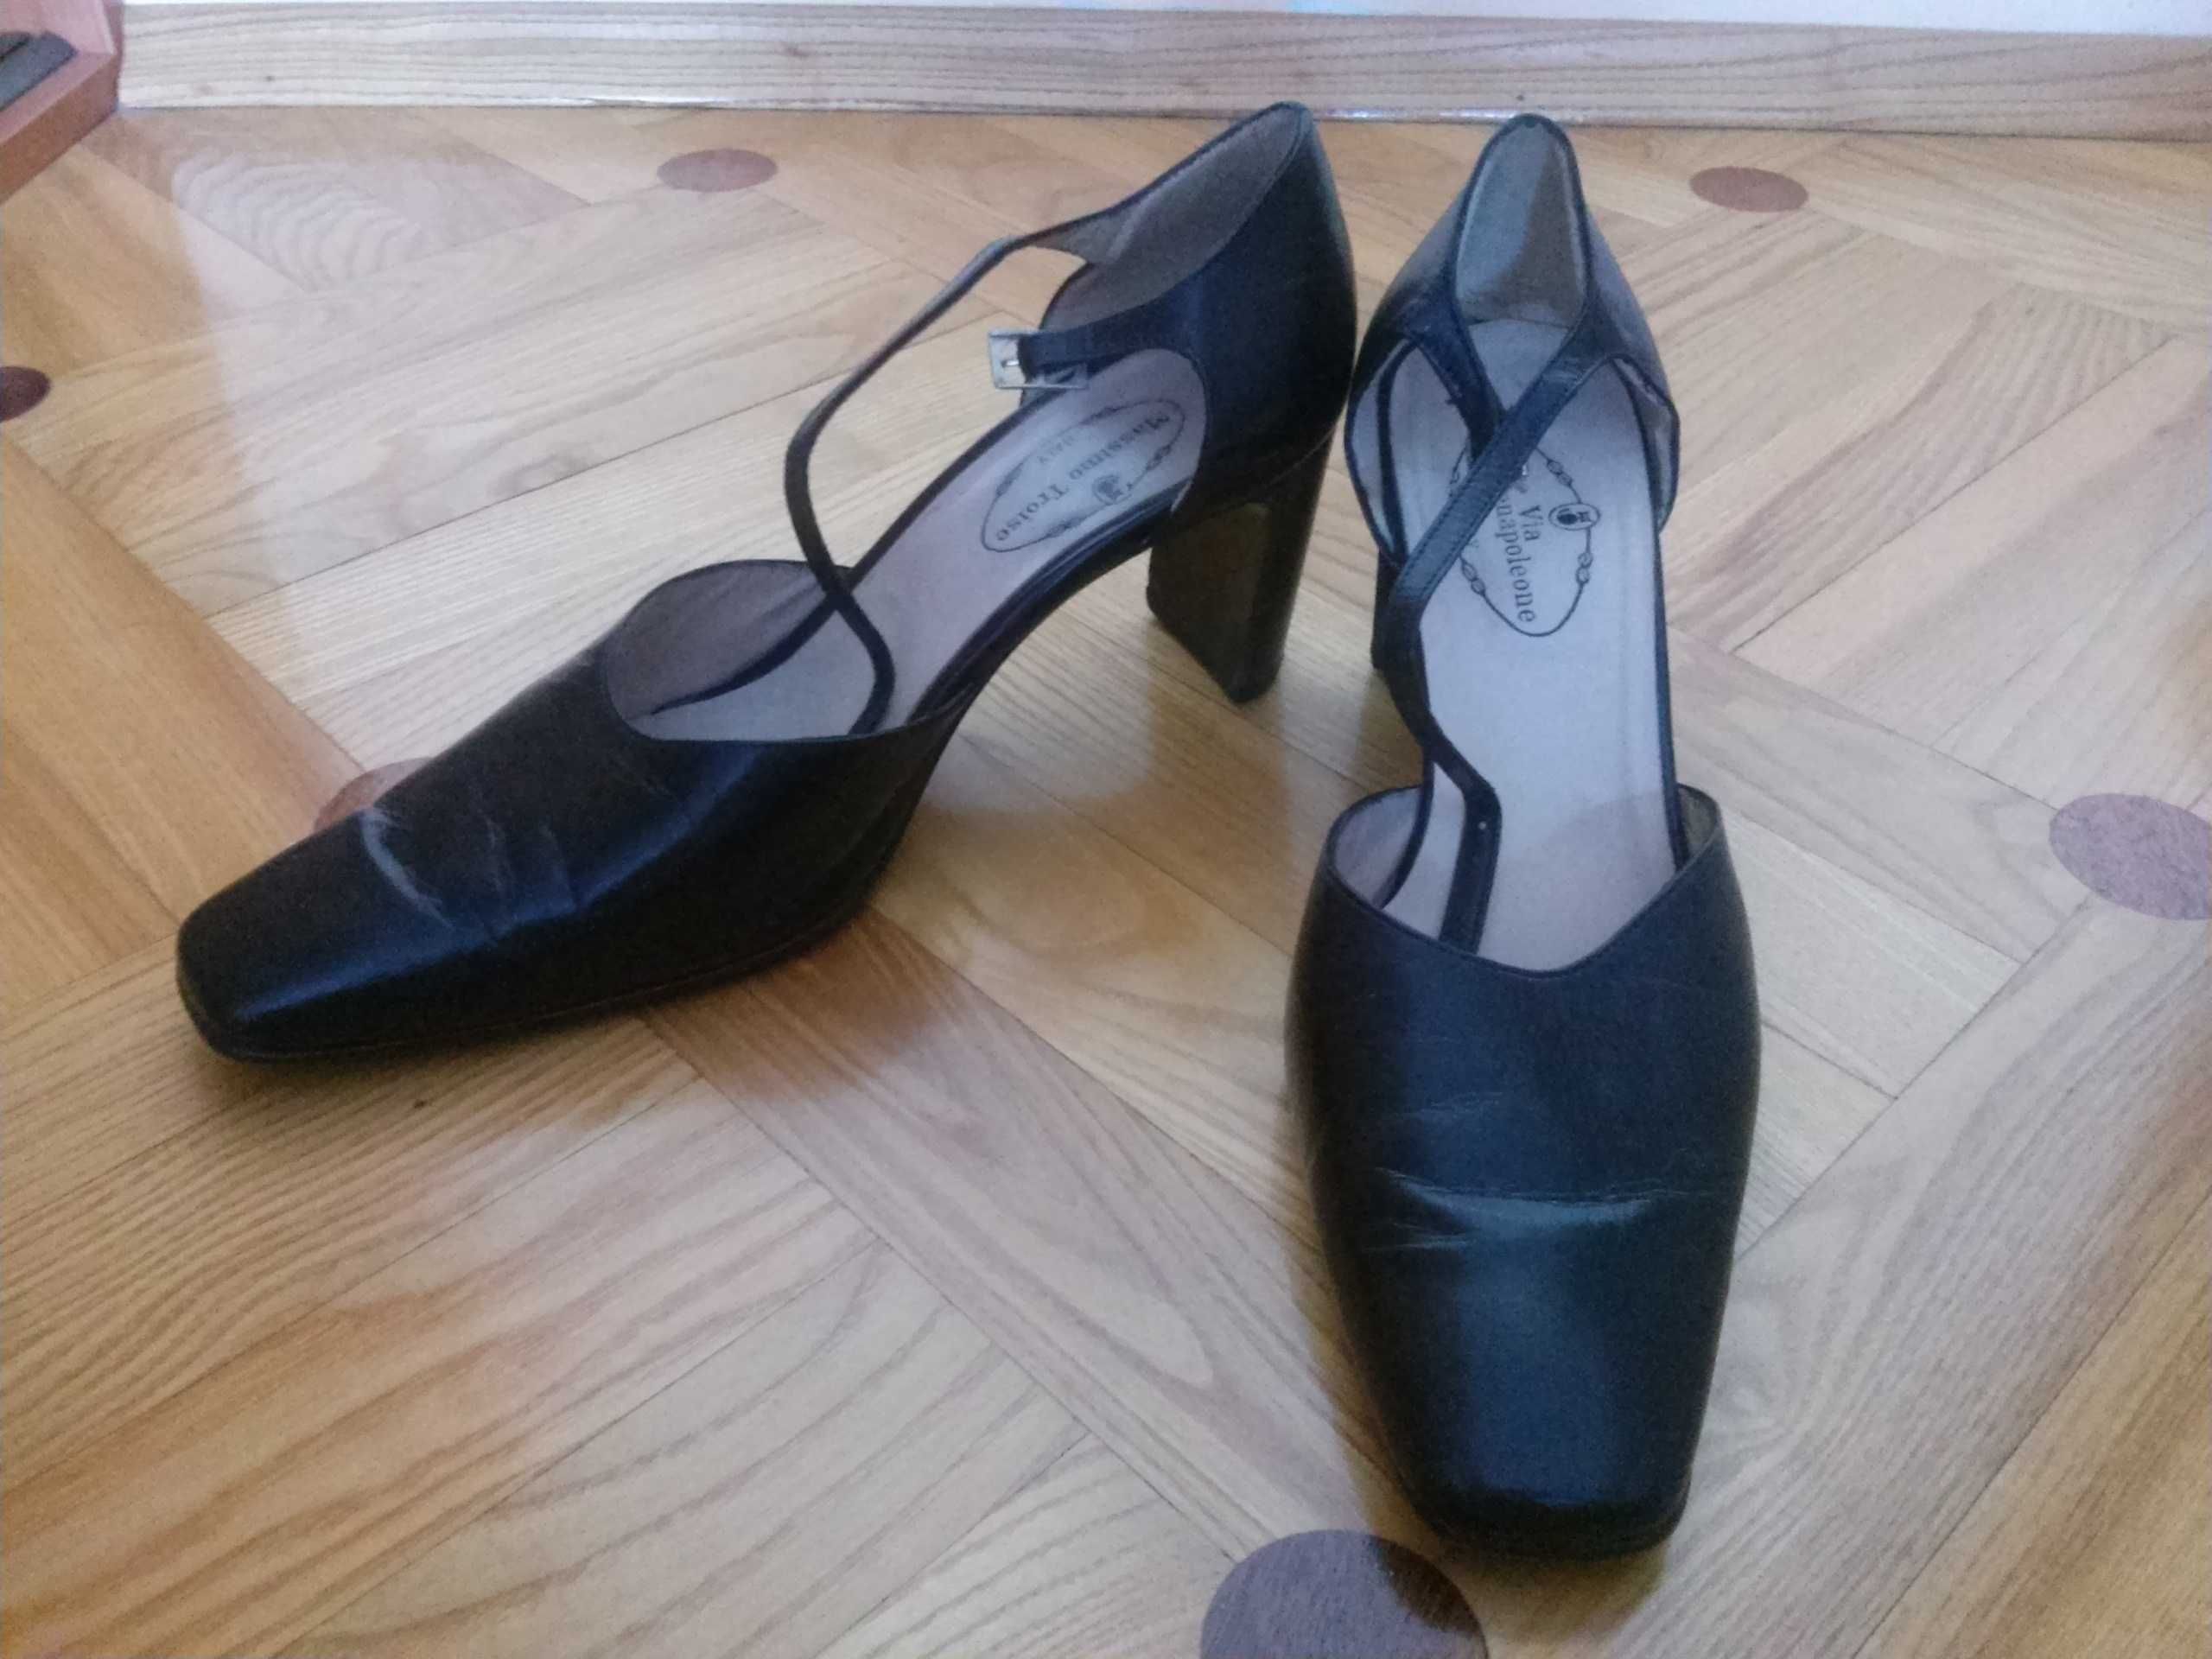 czółenka, damskie buty na obcasie, rozmiar 38 - czarne Massimo Troise